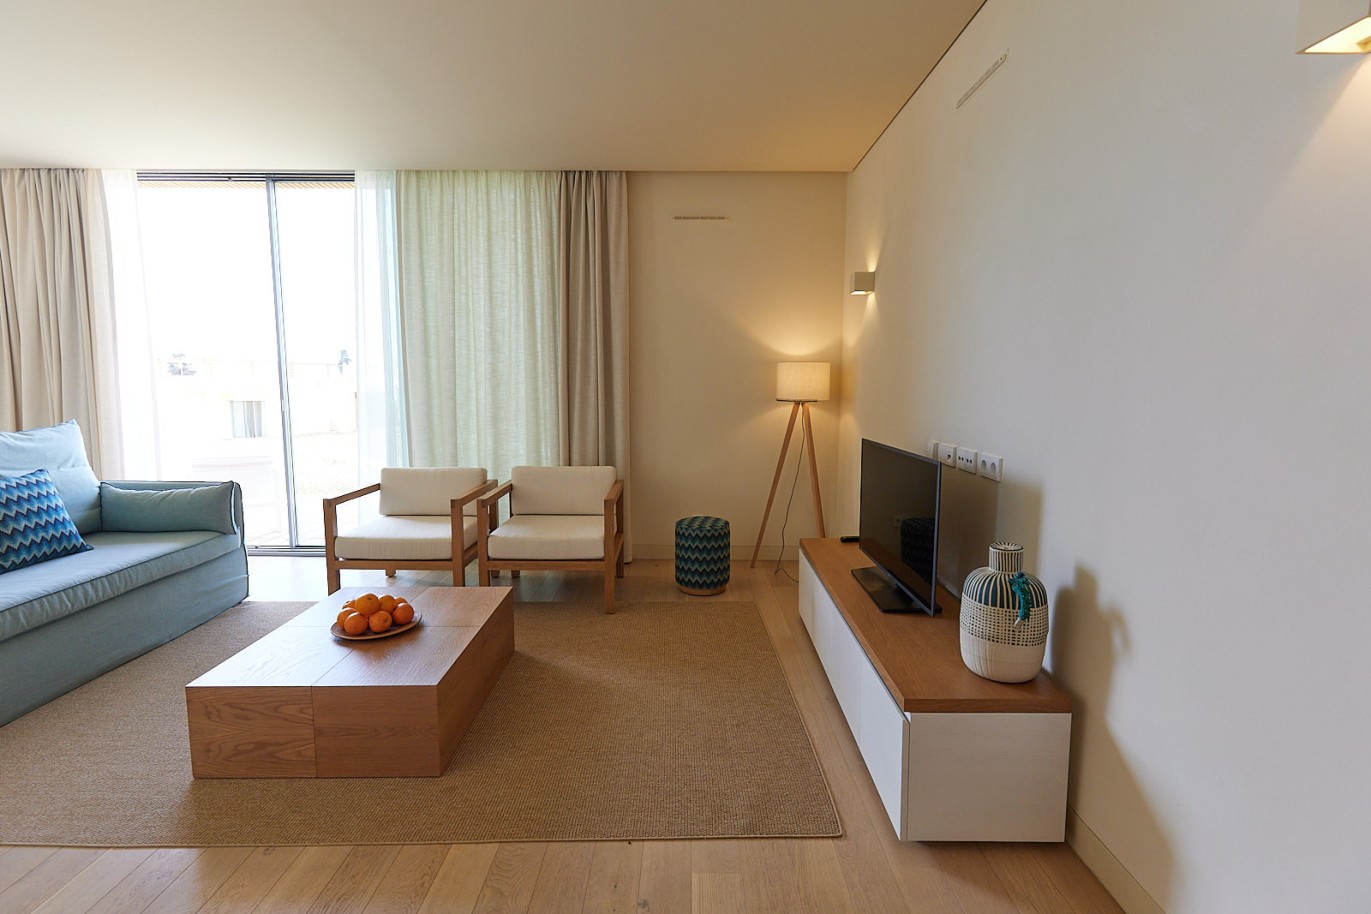 2 bedroom apartment in resort, for sale in Porches, Algarve_229251